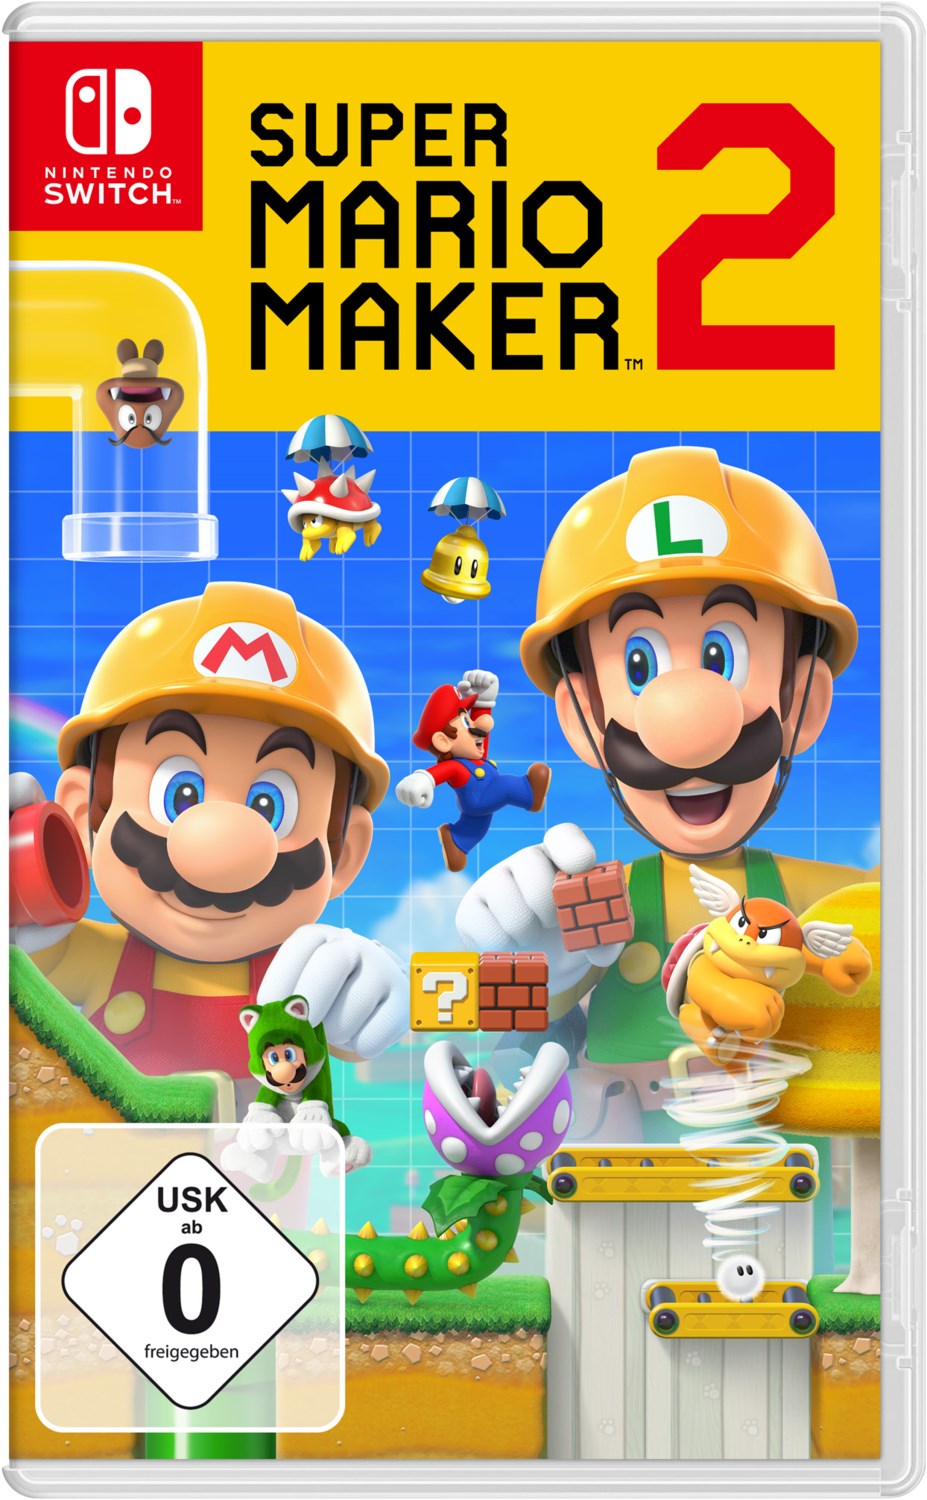 Super Mario Maker 2 – Nintendo Switch